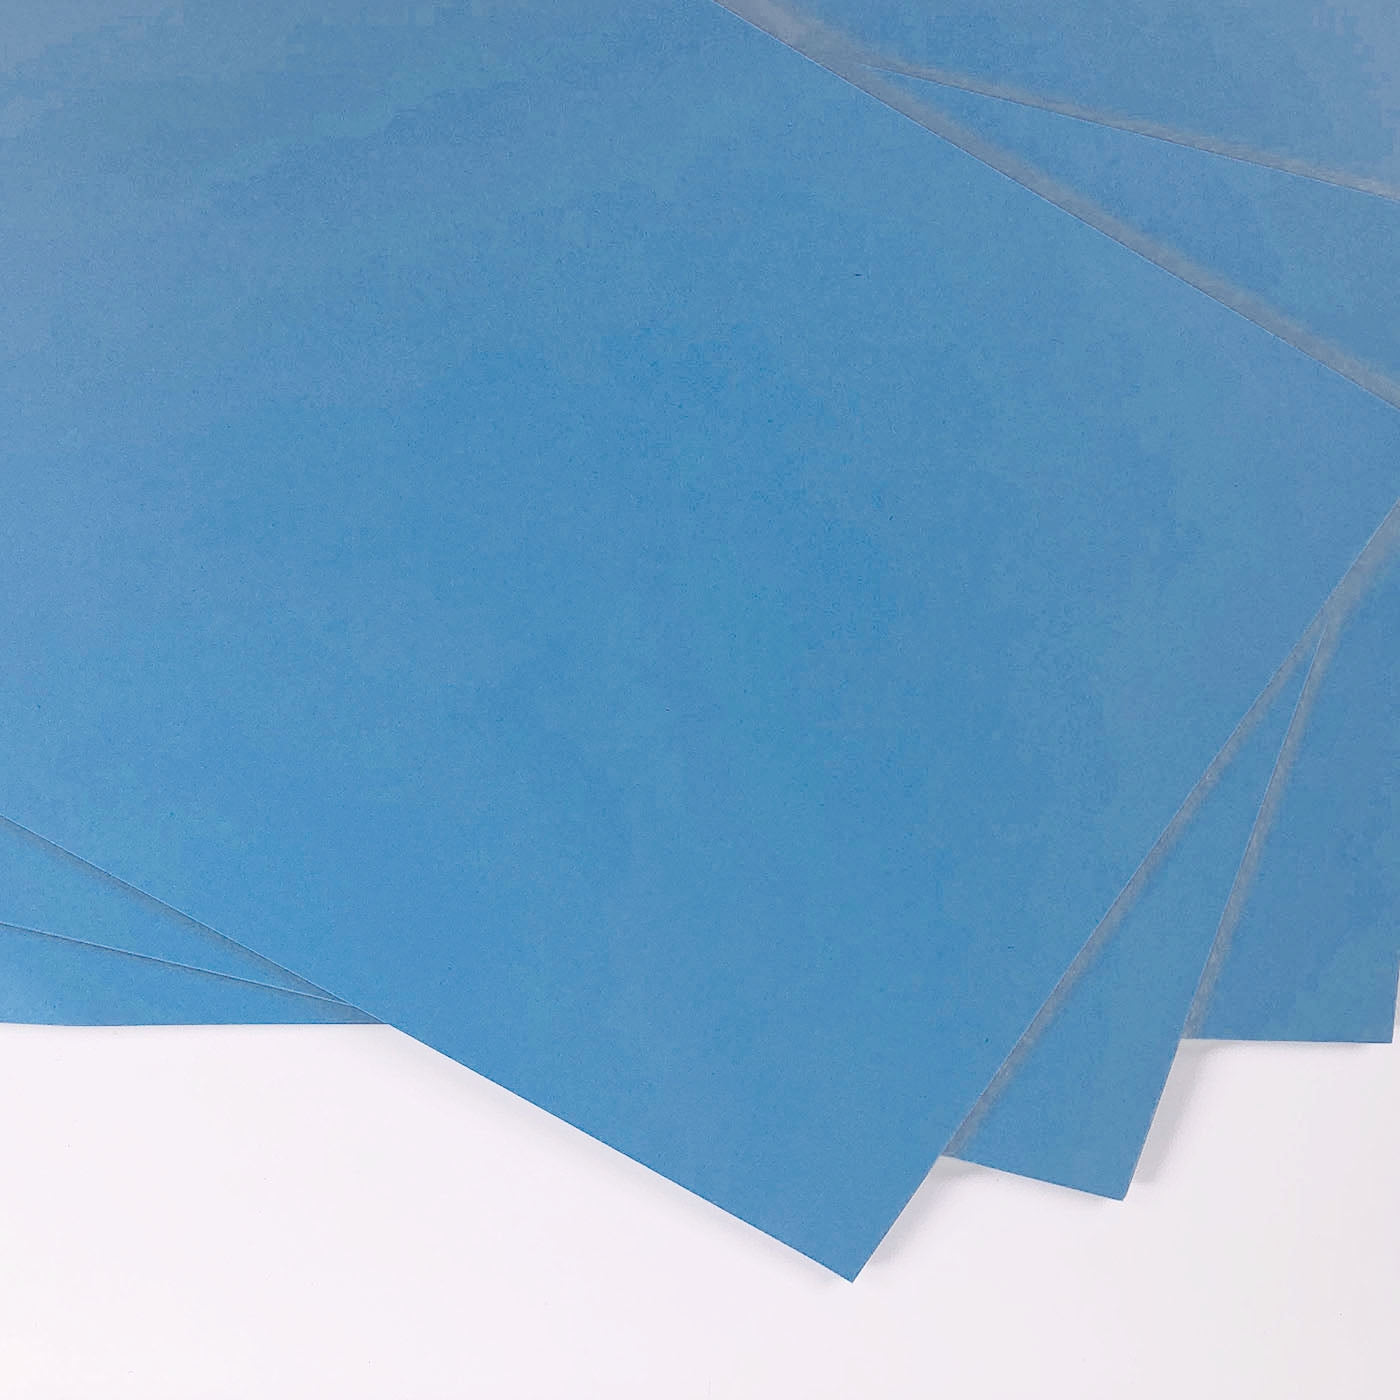 a4 blue paper